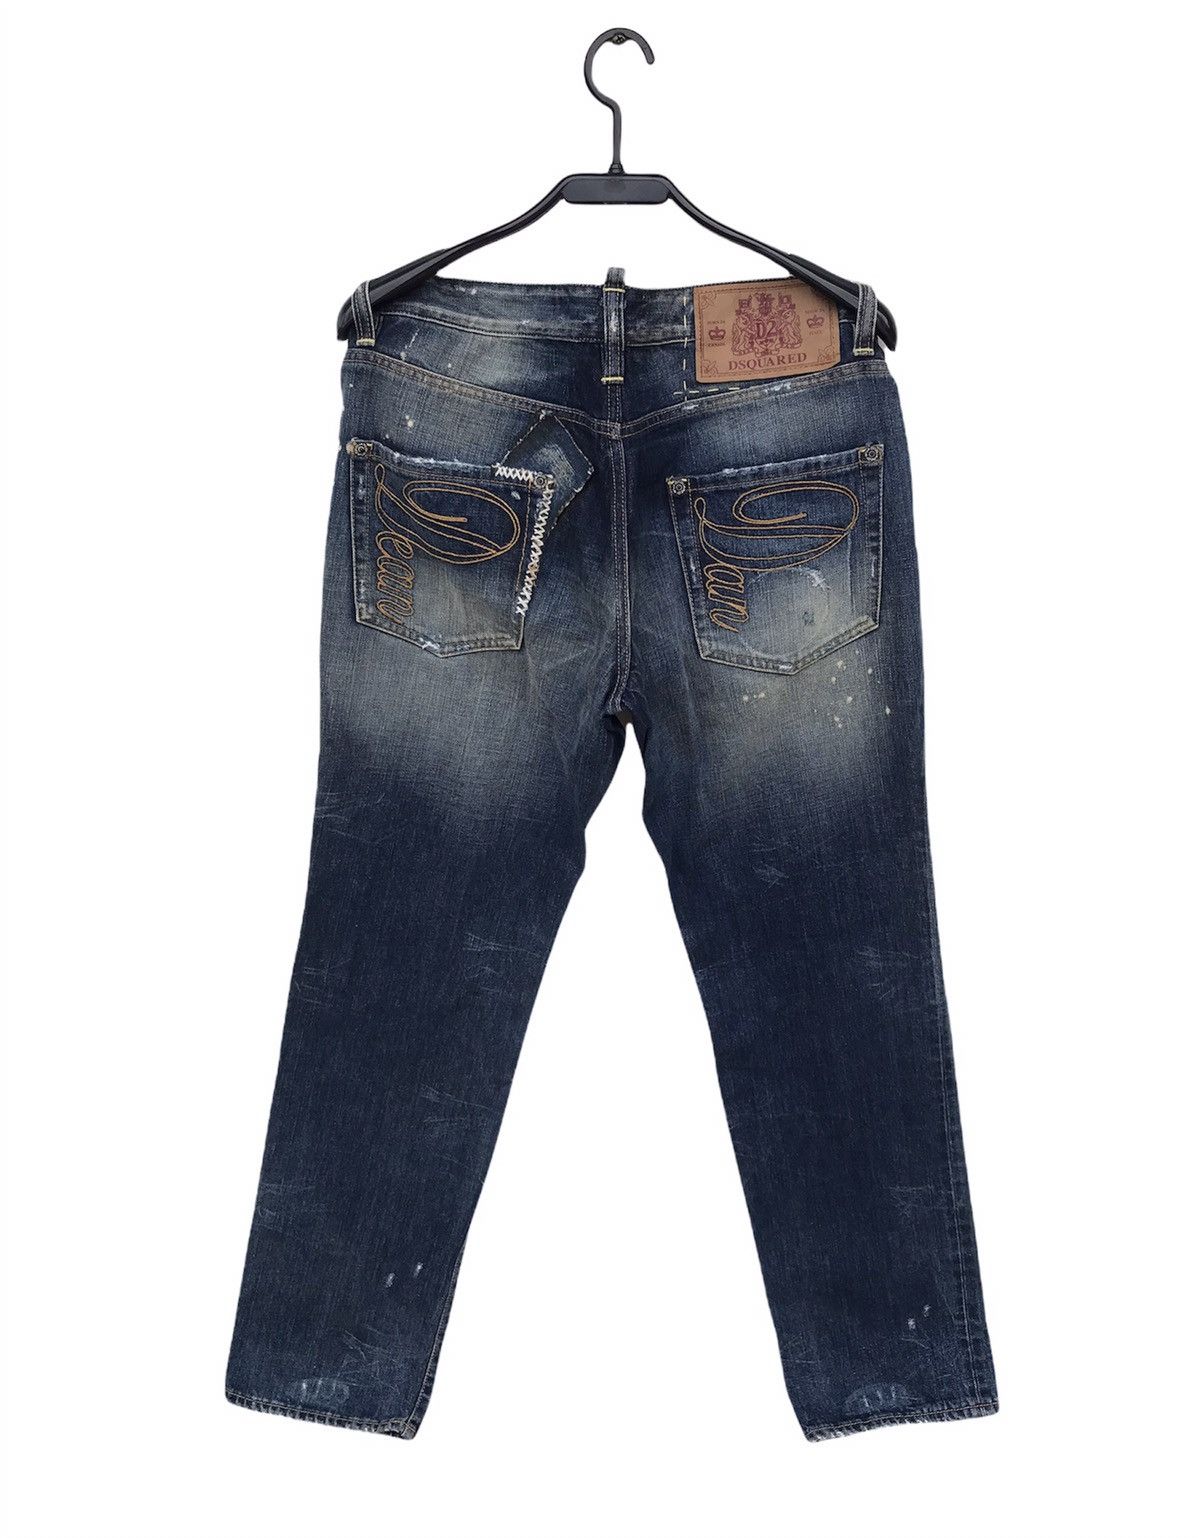 Vintage Dsquared2 Denim Jeans Rare Design - 1